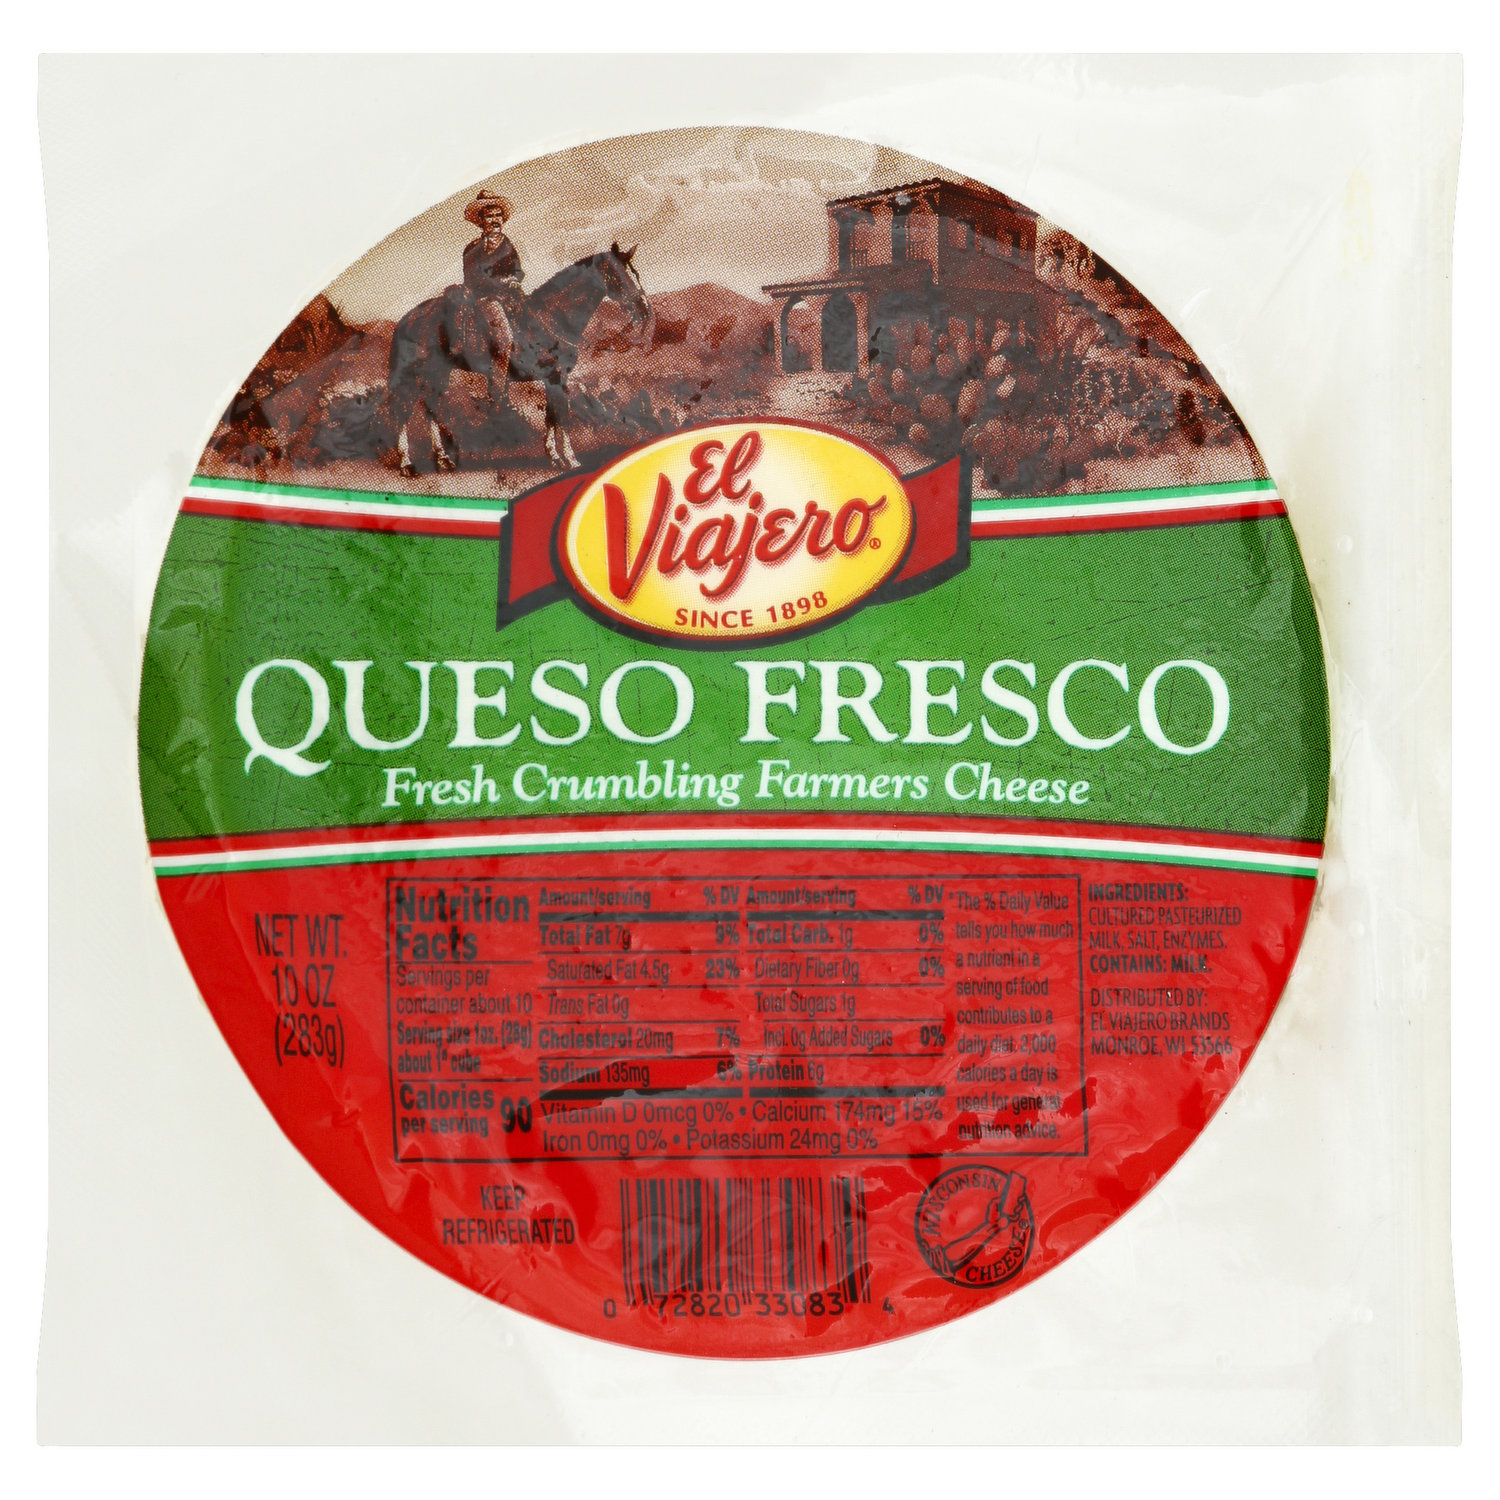 Queso Fresco Mexicano Tray - Tropical Cheese